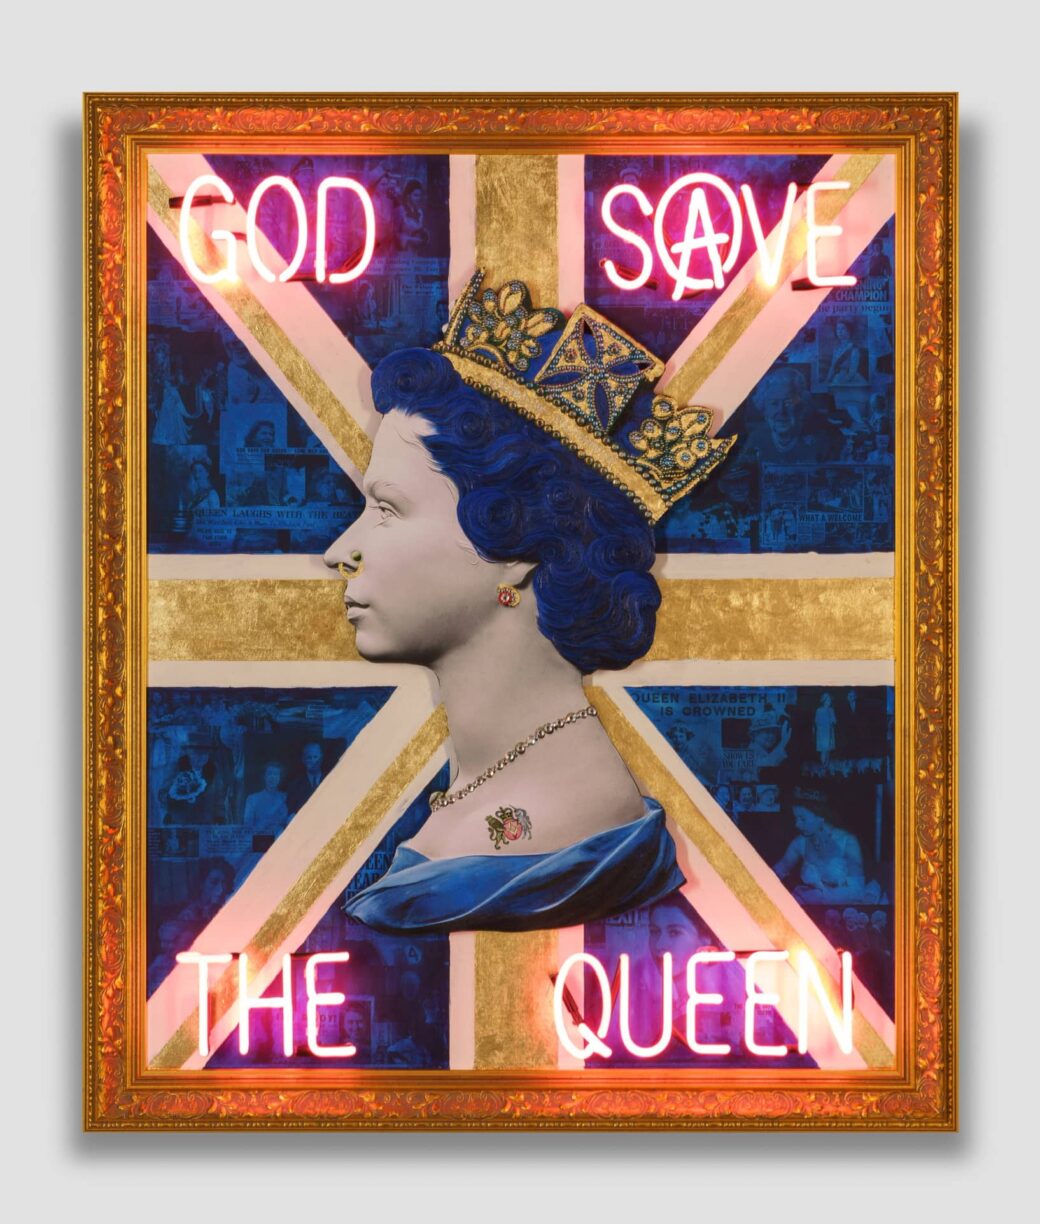 Mark sloper god save the queen artwork